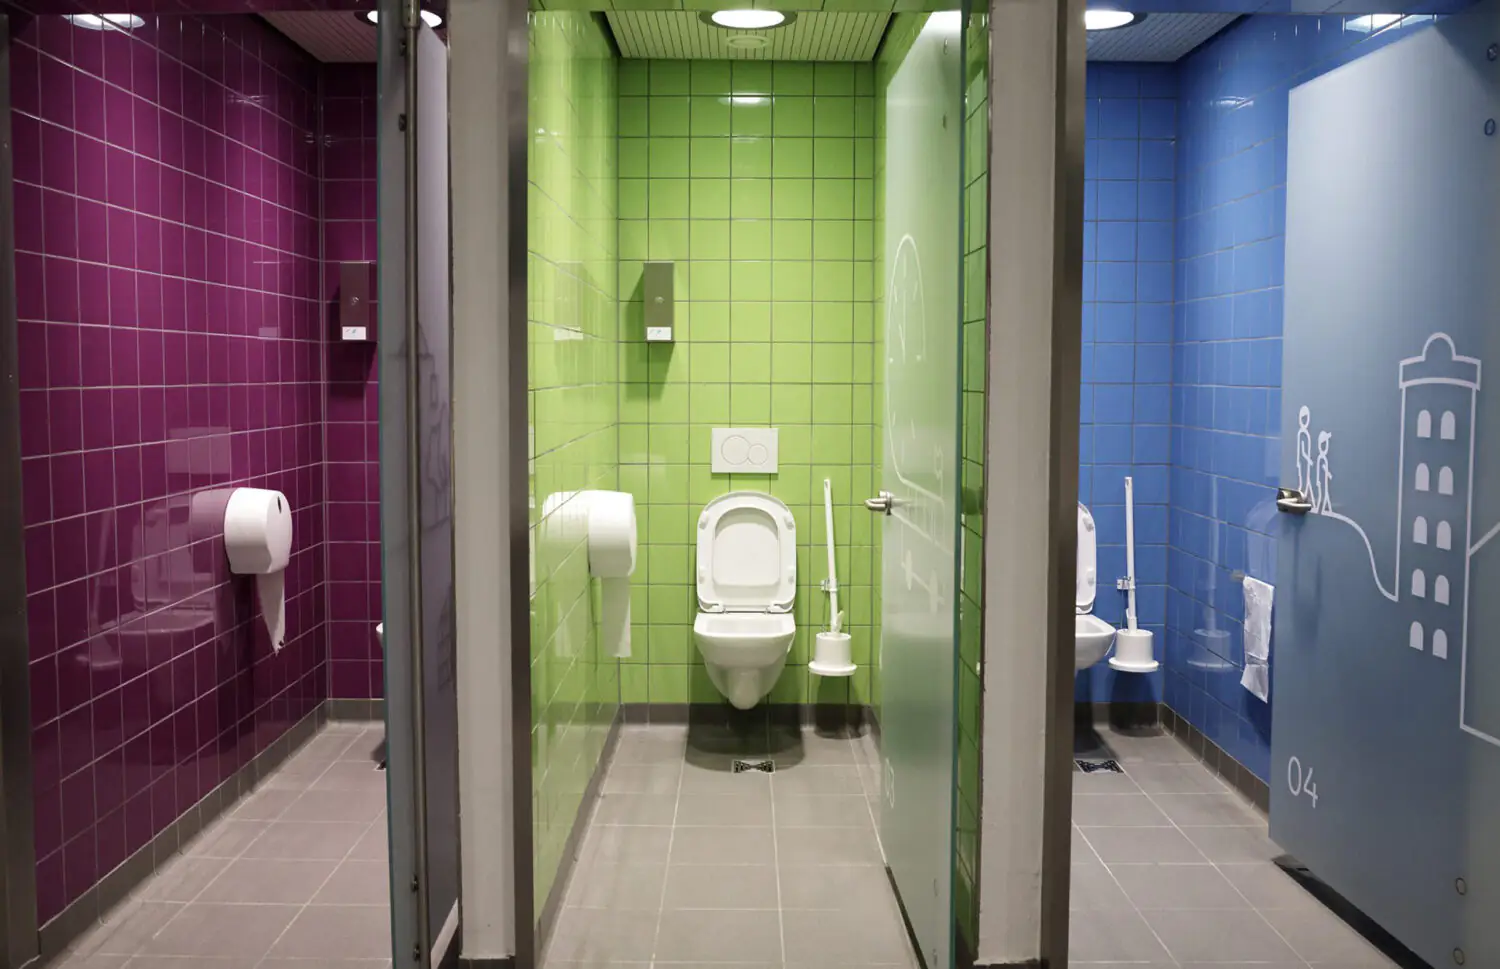 Public Toilets across Europe: Nine Remarkable Designs